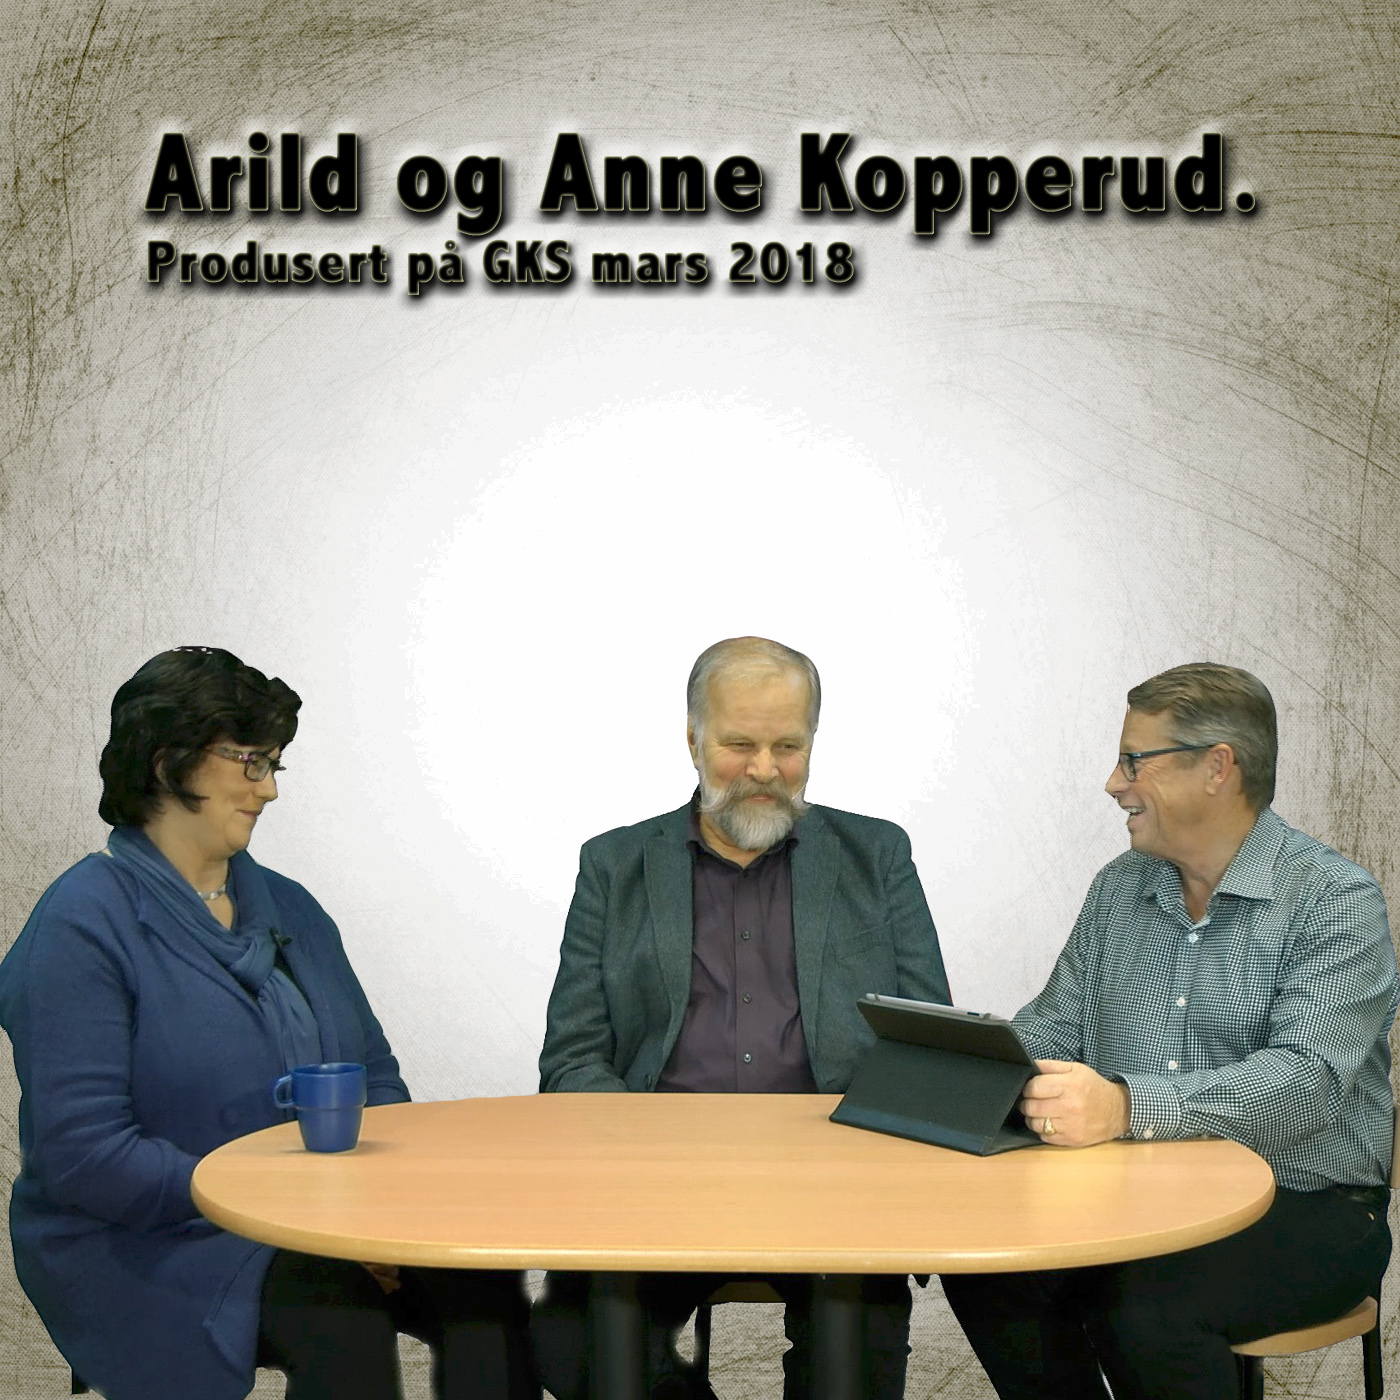 Anne og Arild Kopperud